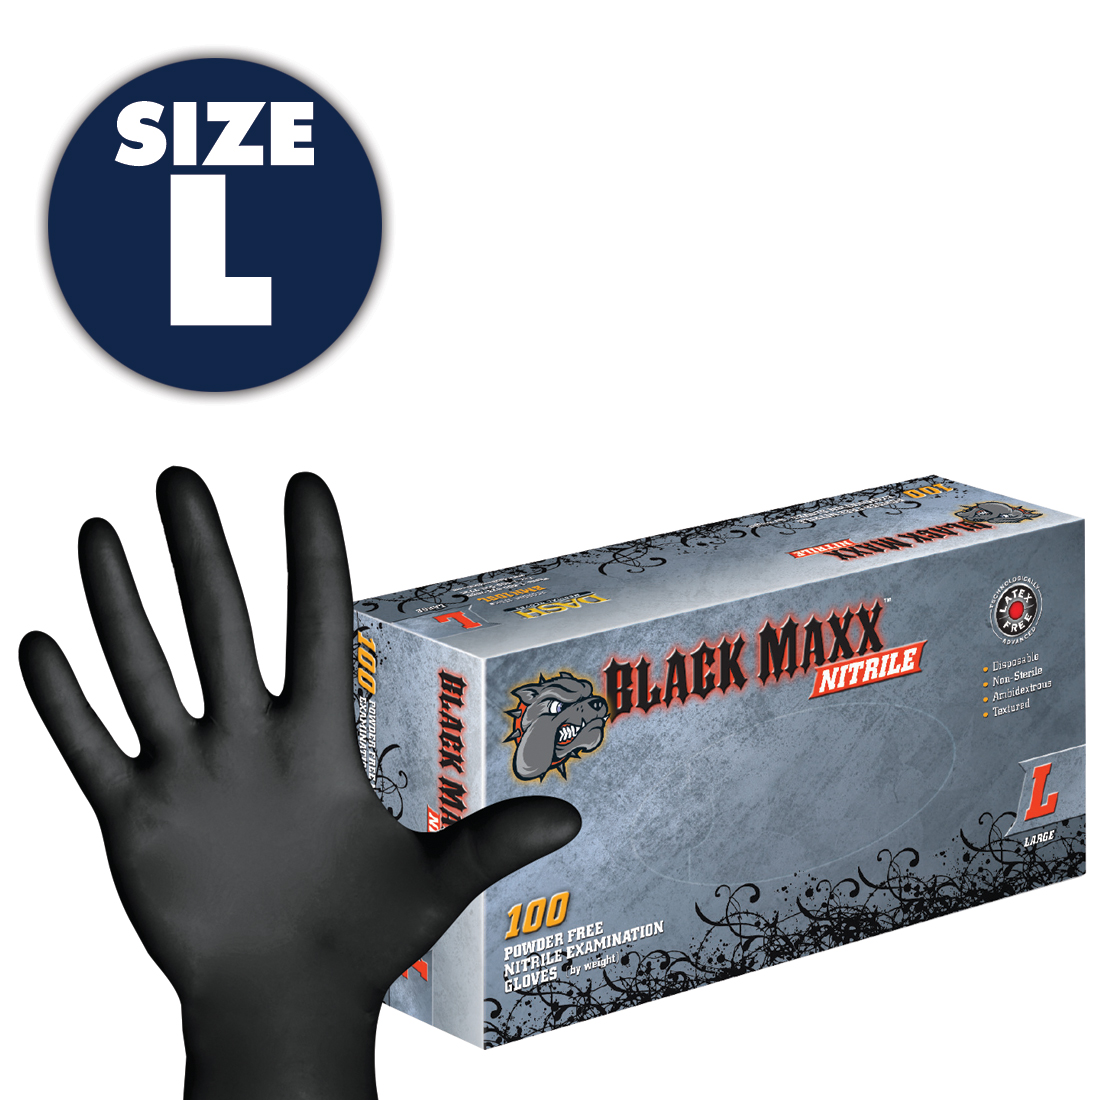 Black Maxx® Nitrile Exam Glove Large, Latex Free, Powder Free- 100/Box